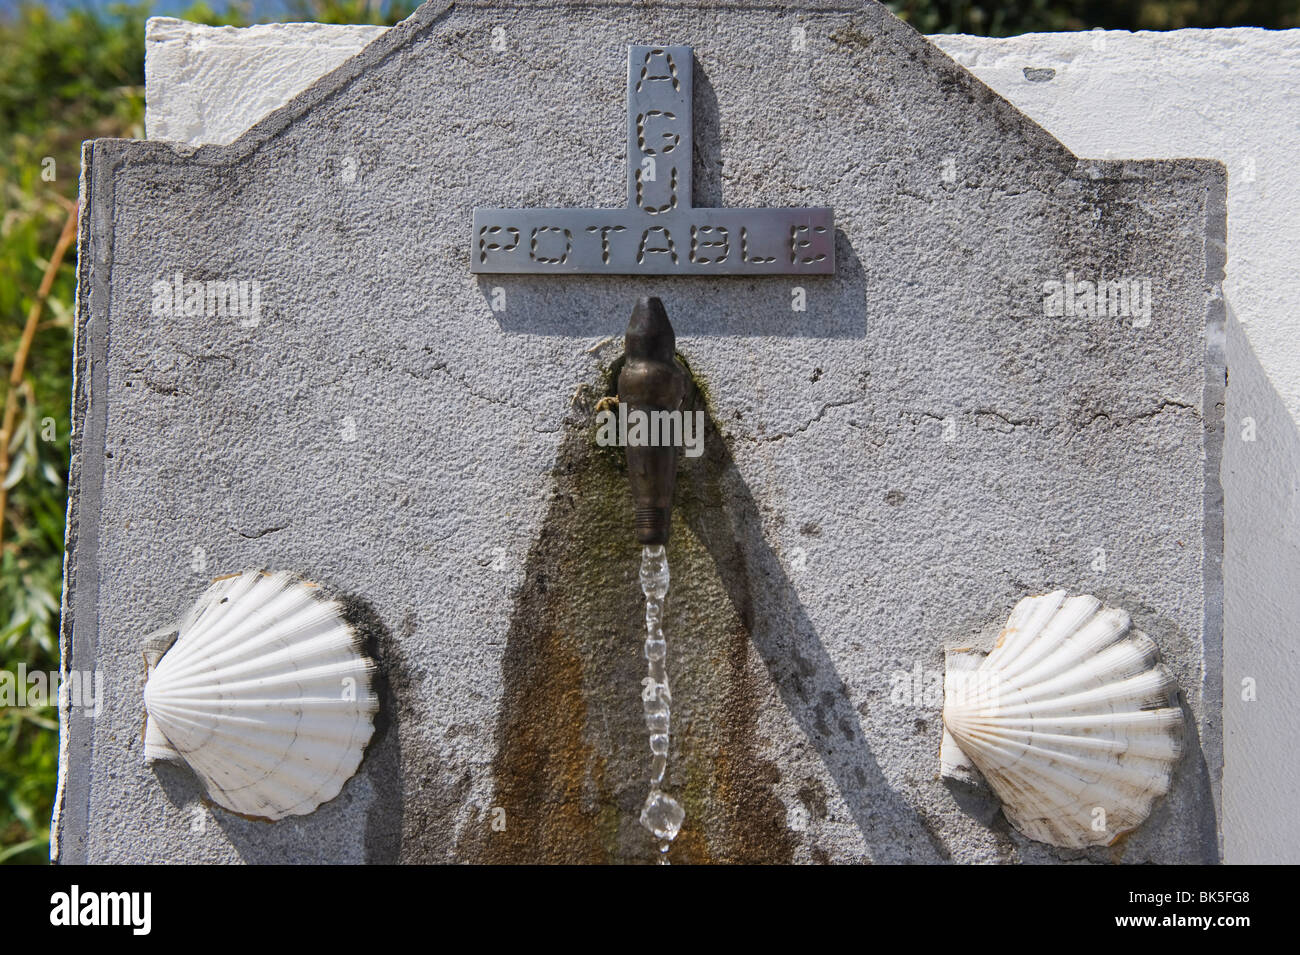 Scallop shells on a water fountain, on the Camino de Santiago, Spain, Europe Stock Photo